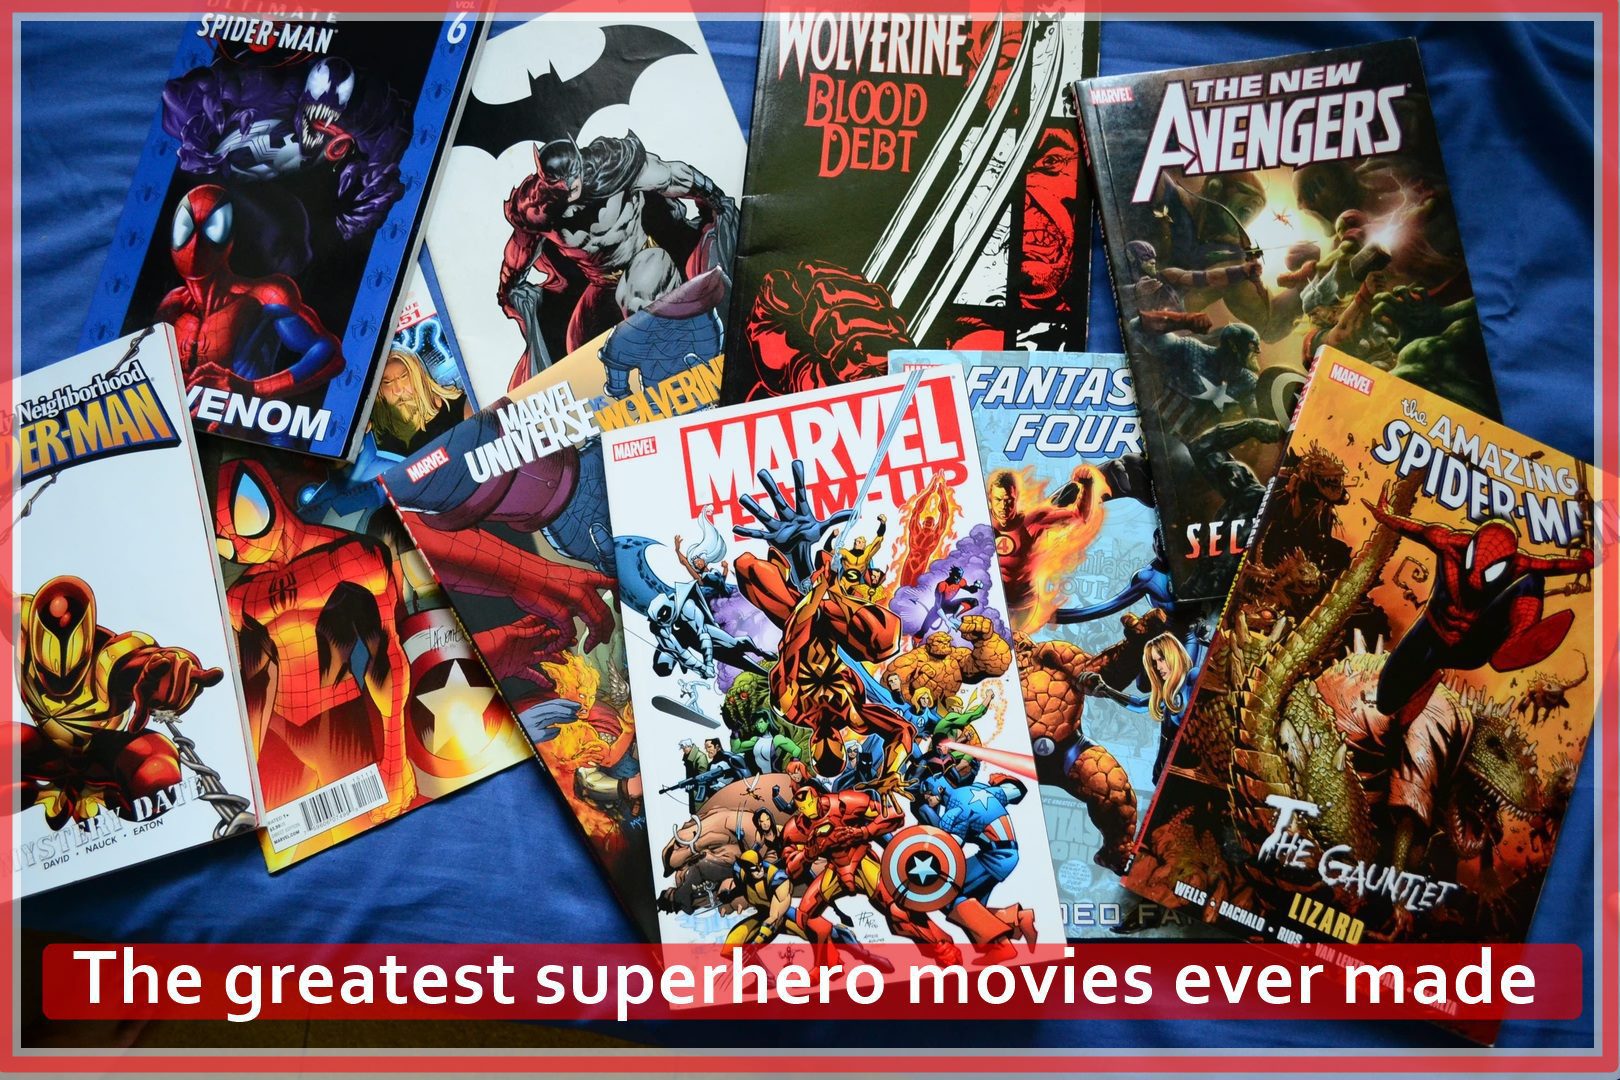 The greatest superhero movies ever made